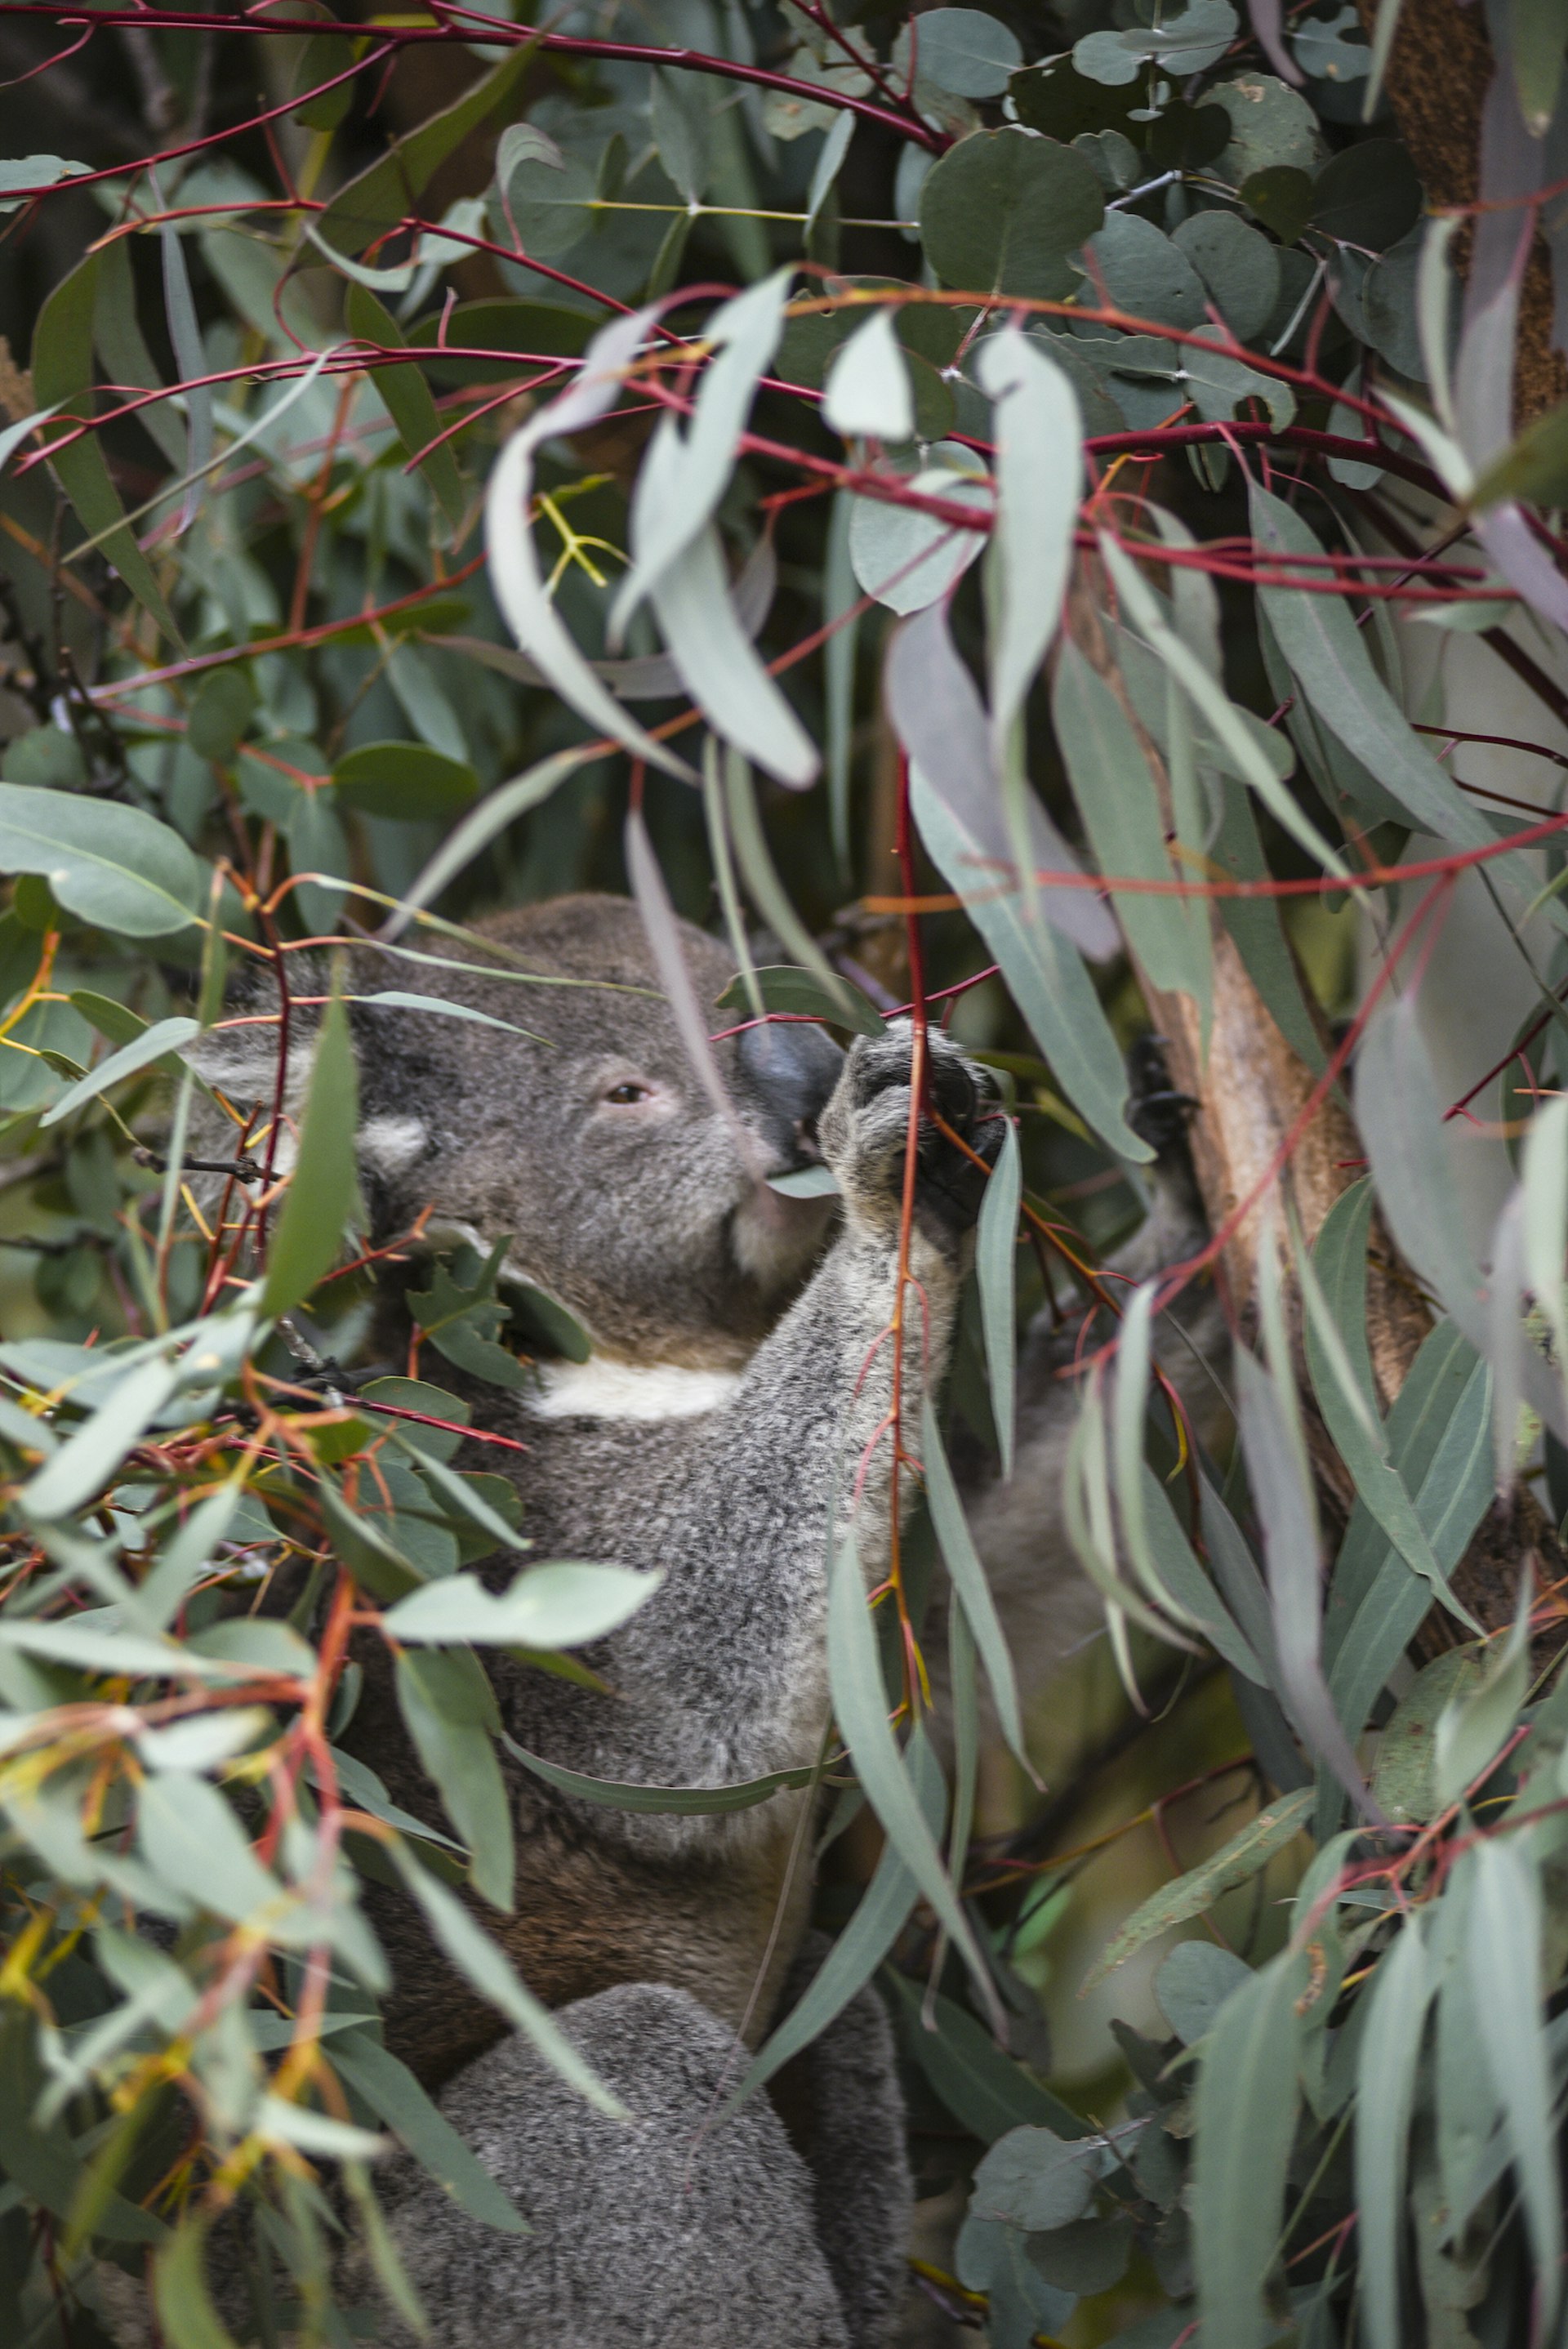 Features - Koala eating eucalyptus leaves in Tidbinbilla nature reserve